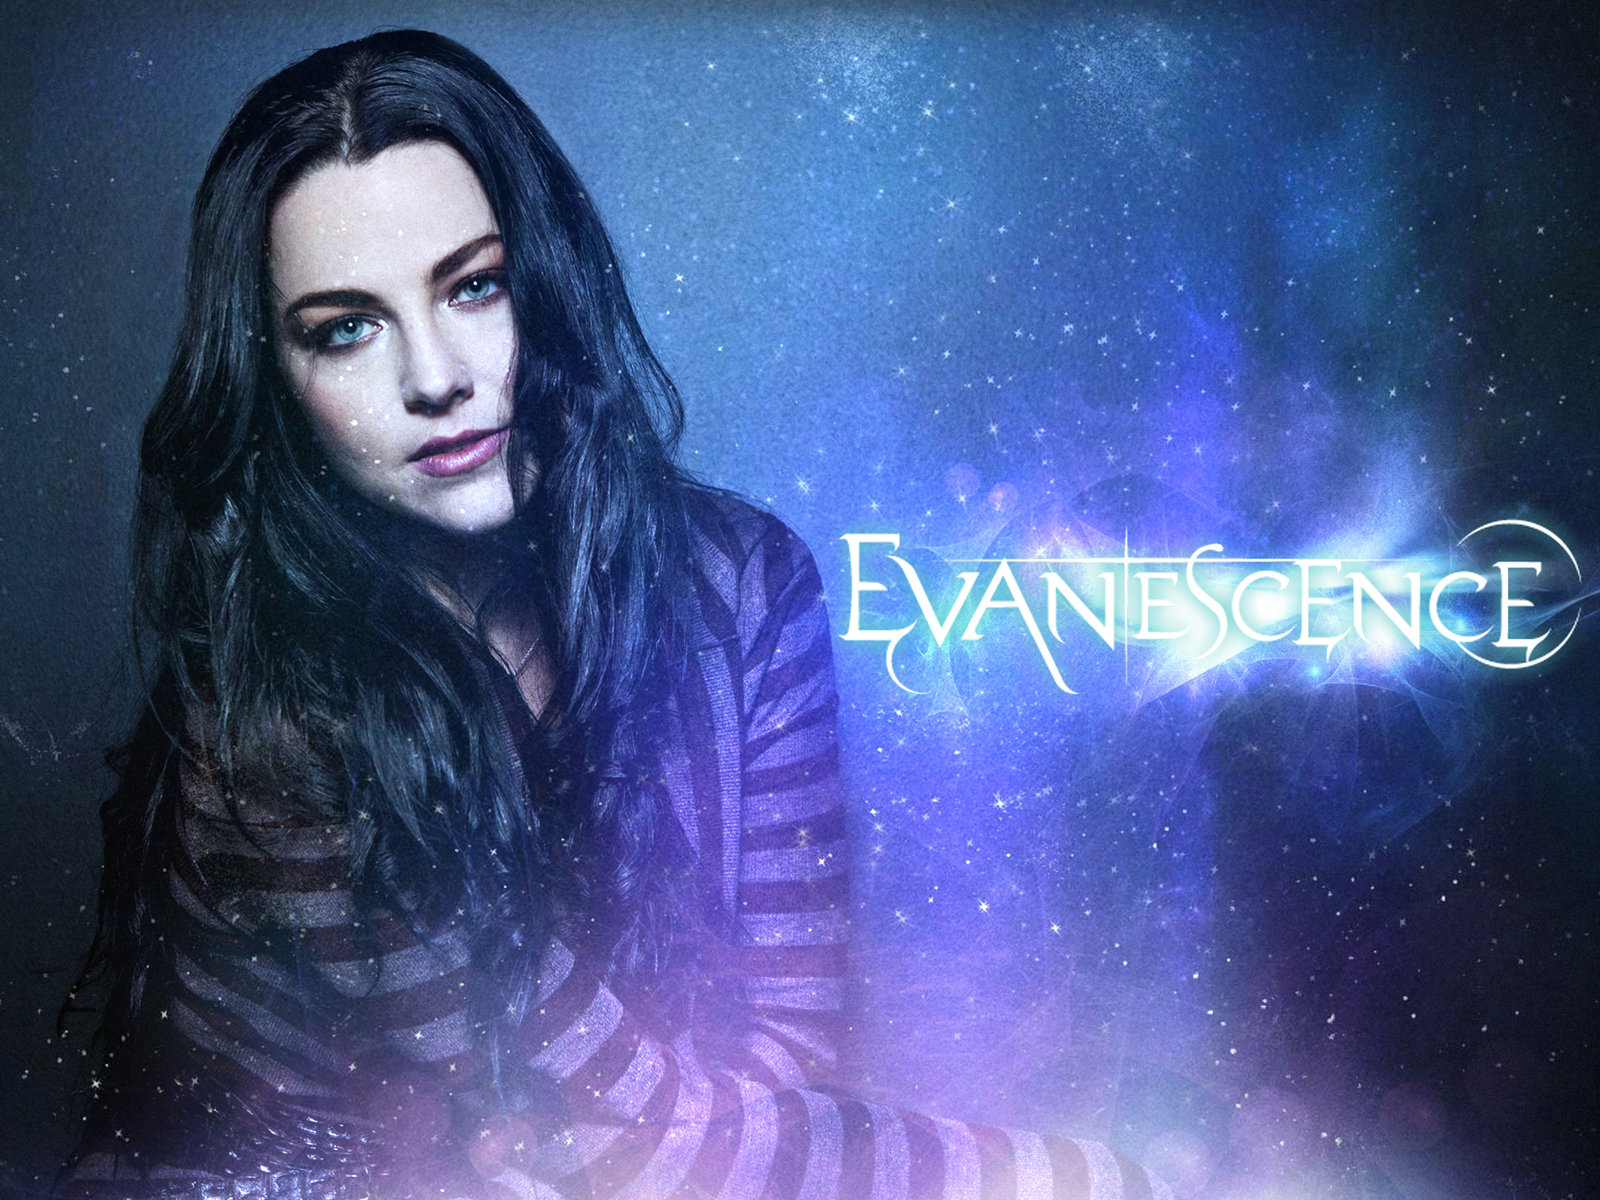 Evanescence Image HD Wallpaper And